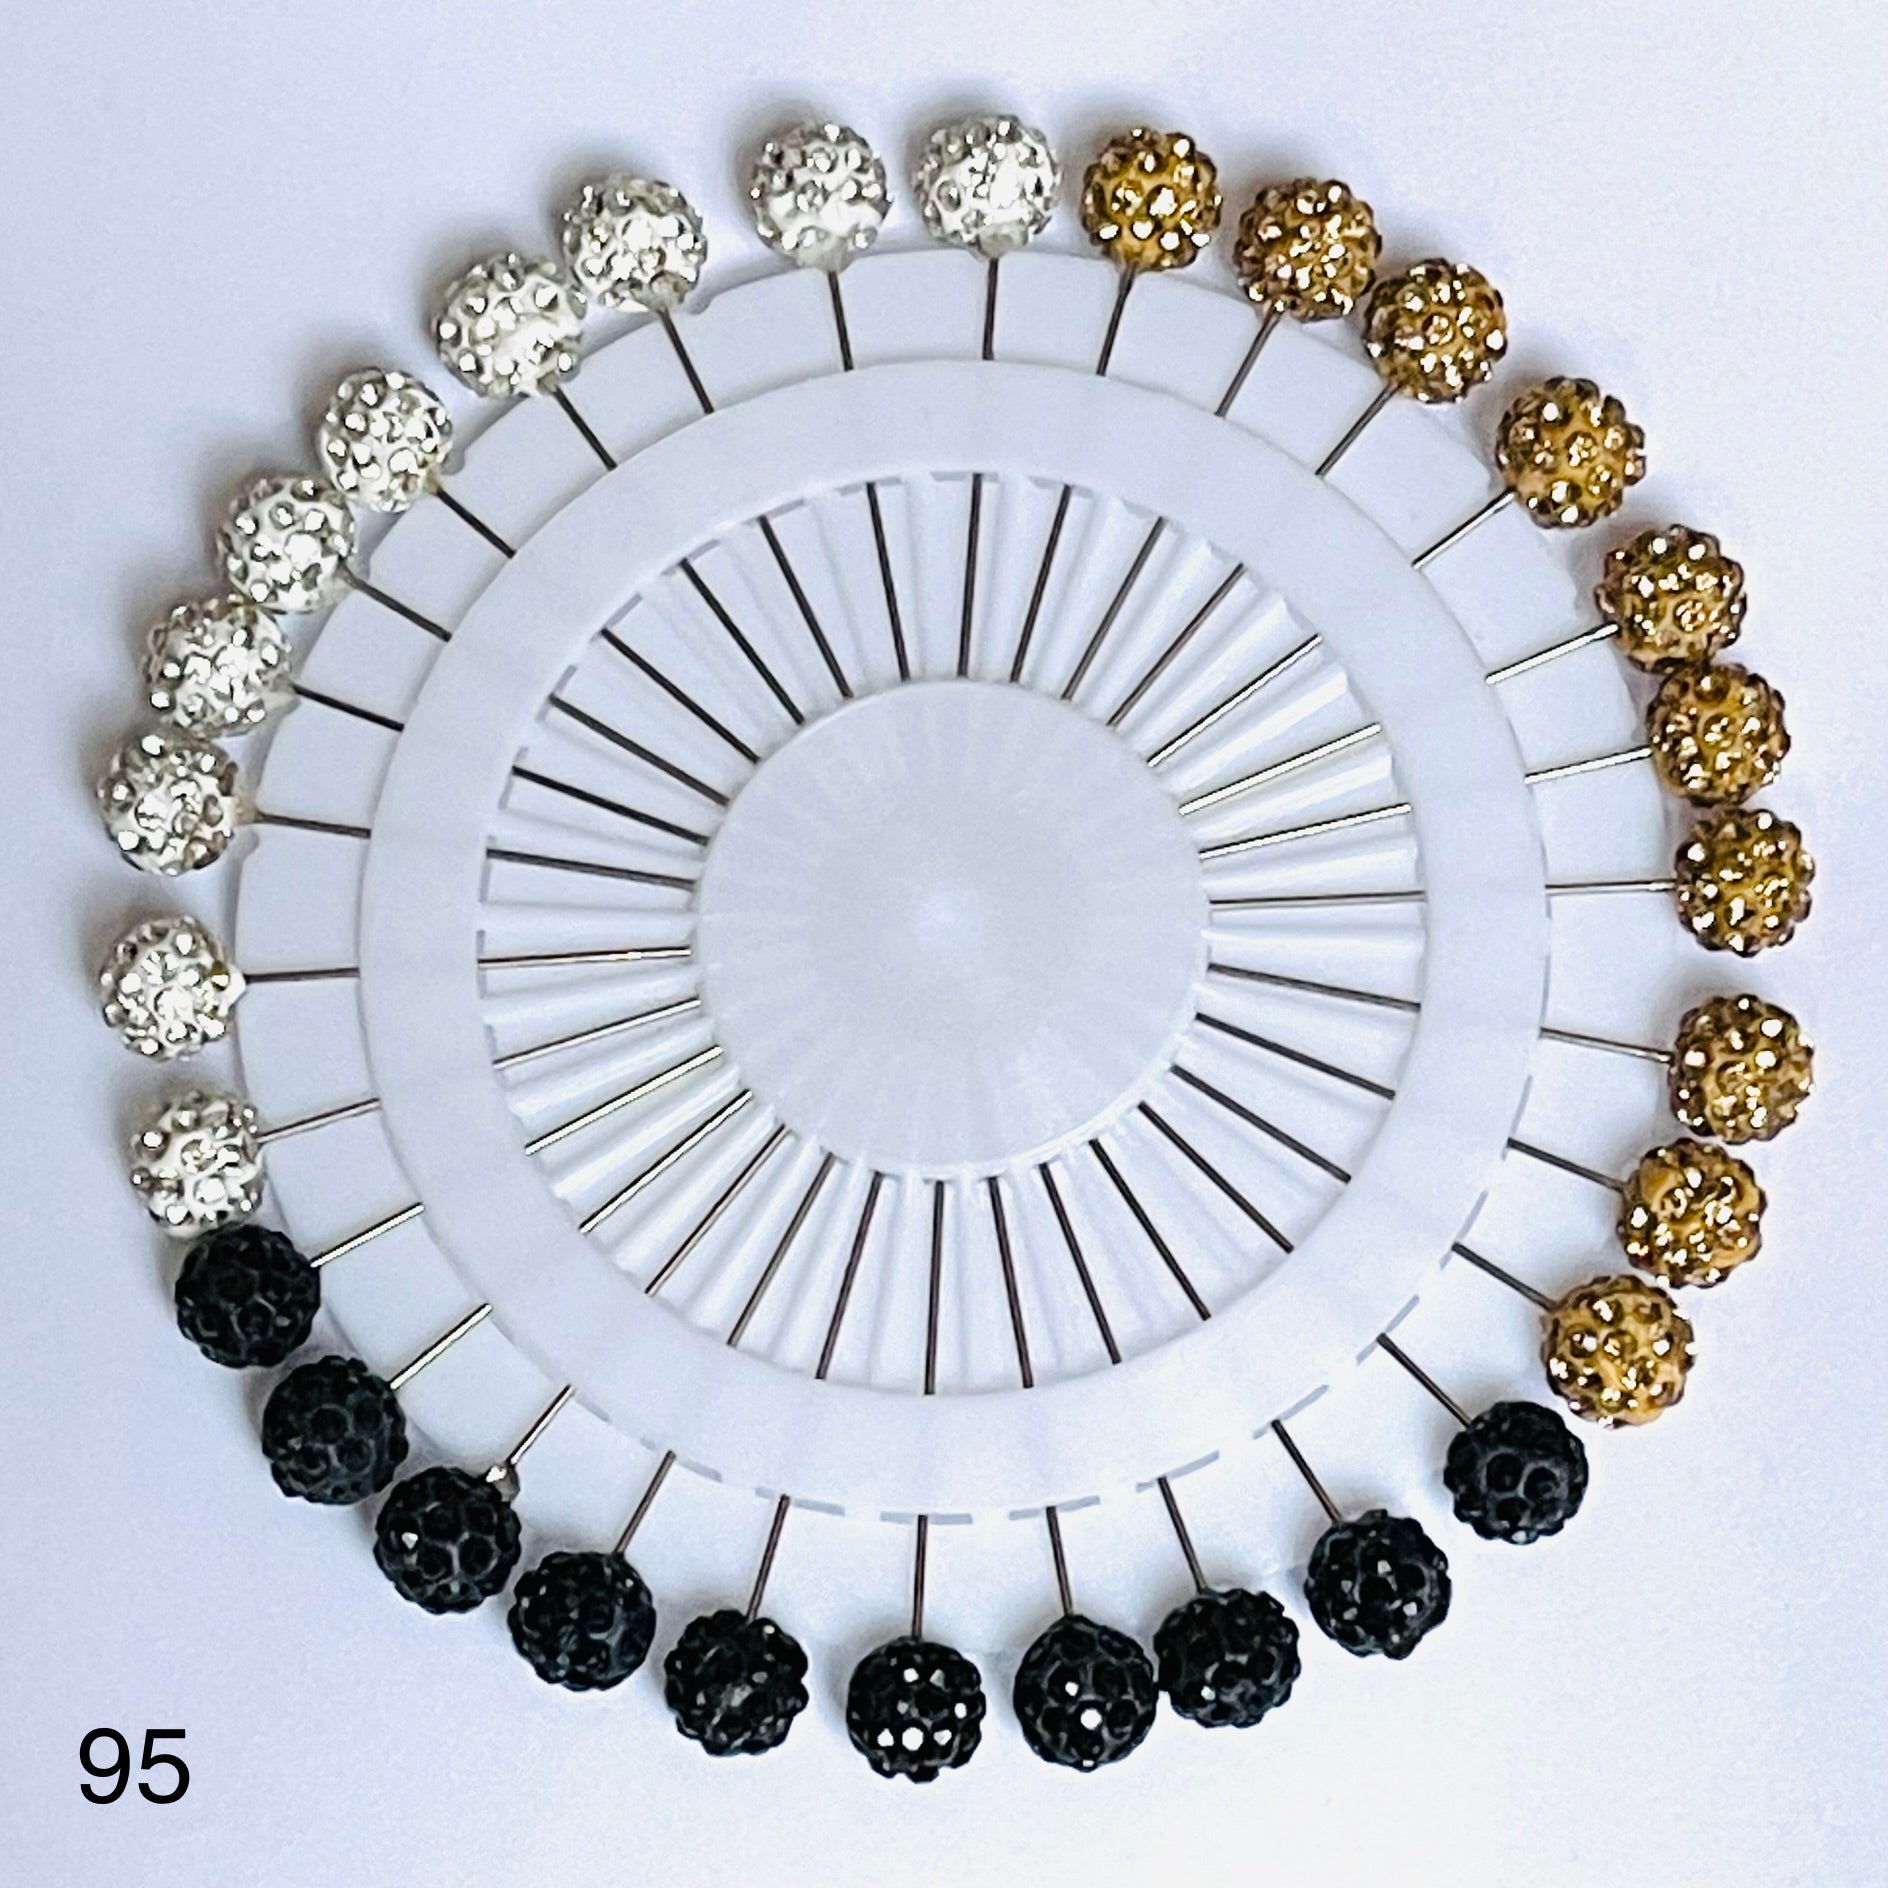 Set of 30 Gold  Silver Black Diamond Crystal Hijab Pins 5.5cm Long #95 - AL SHARIF STORE